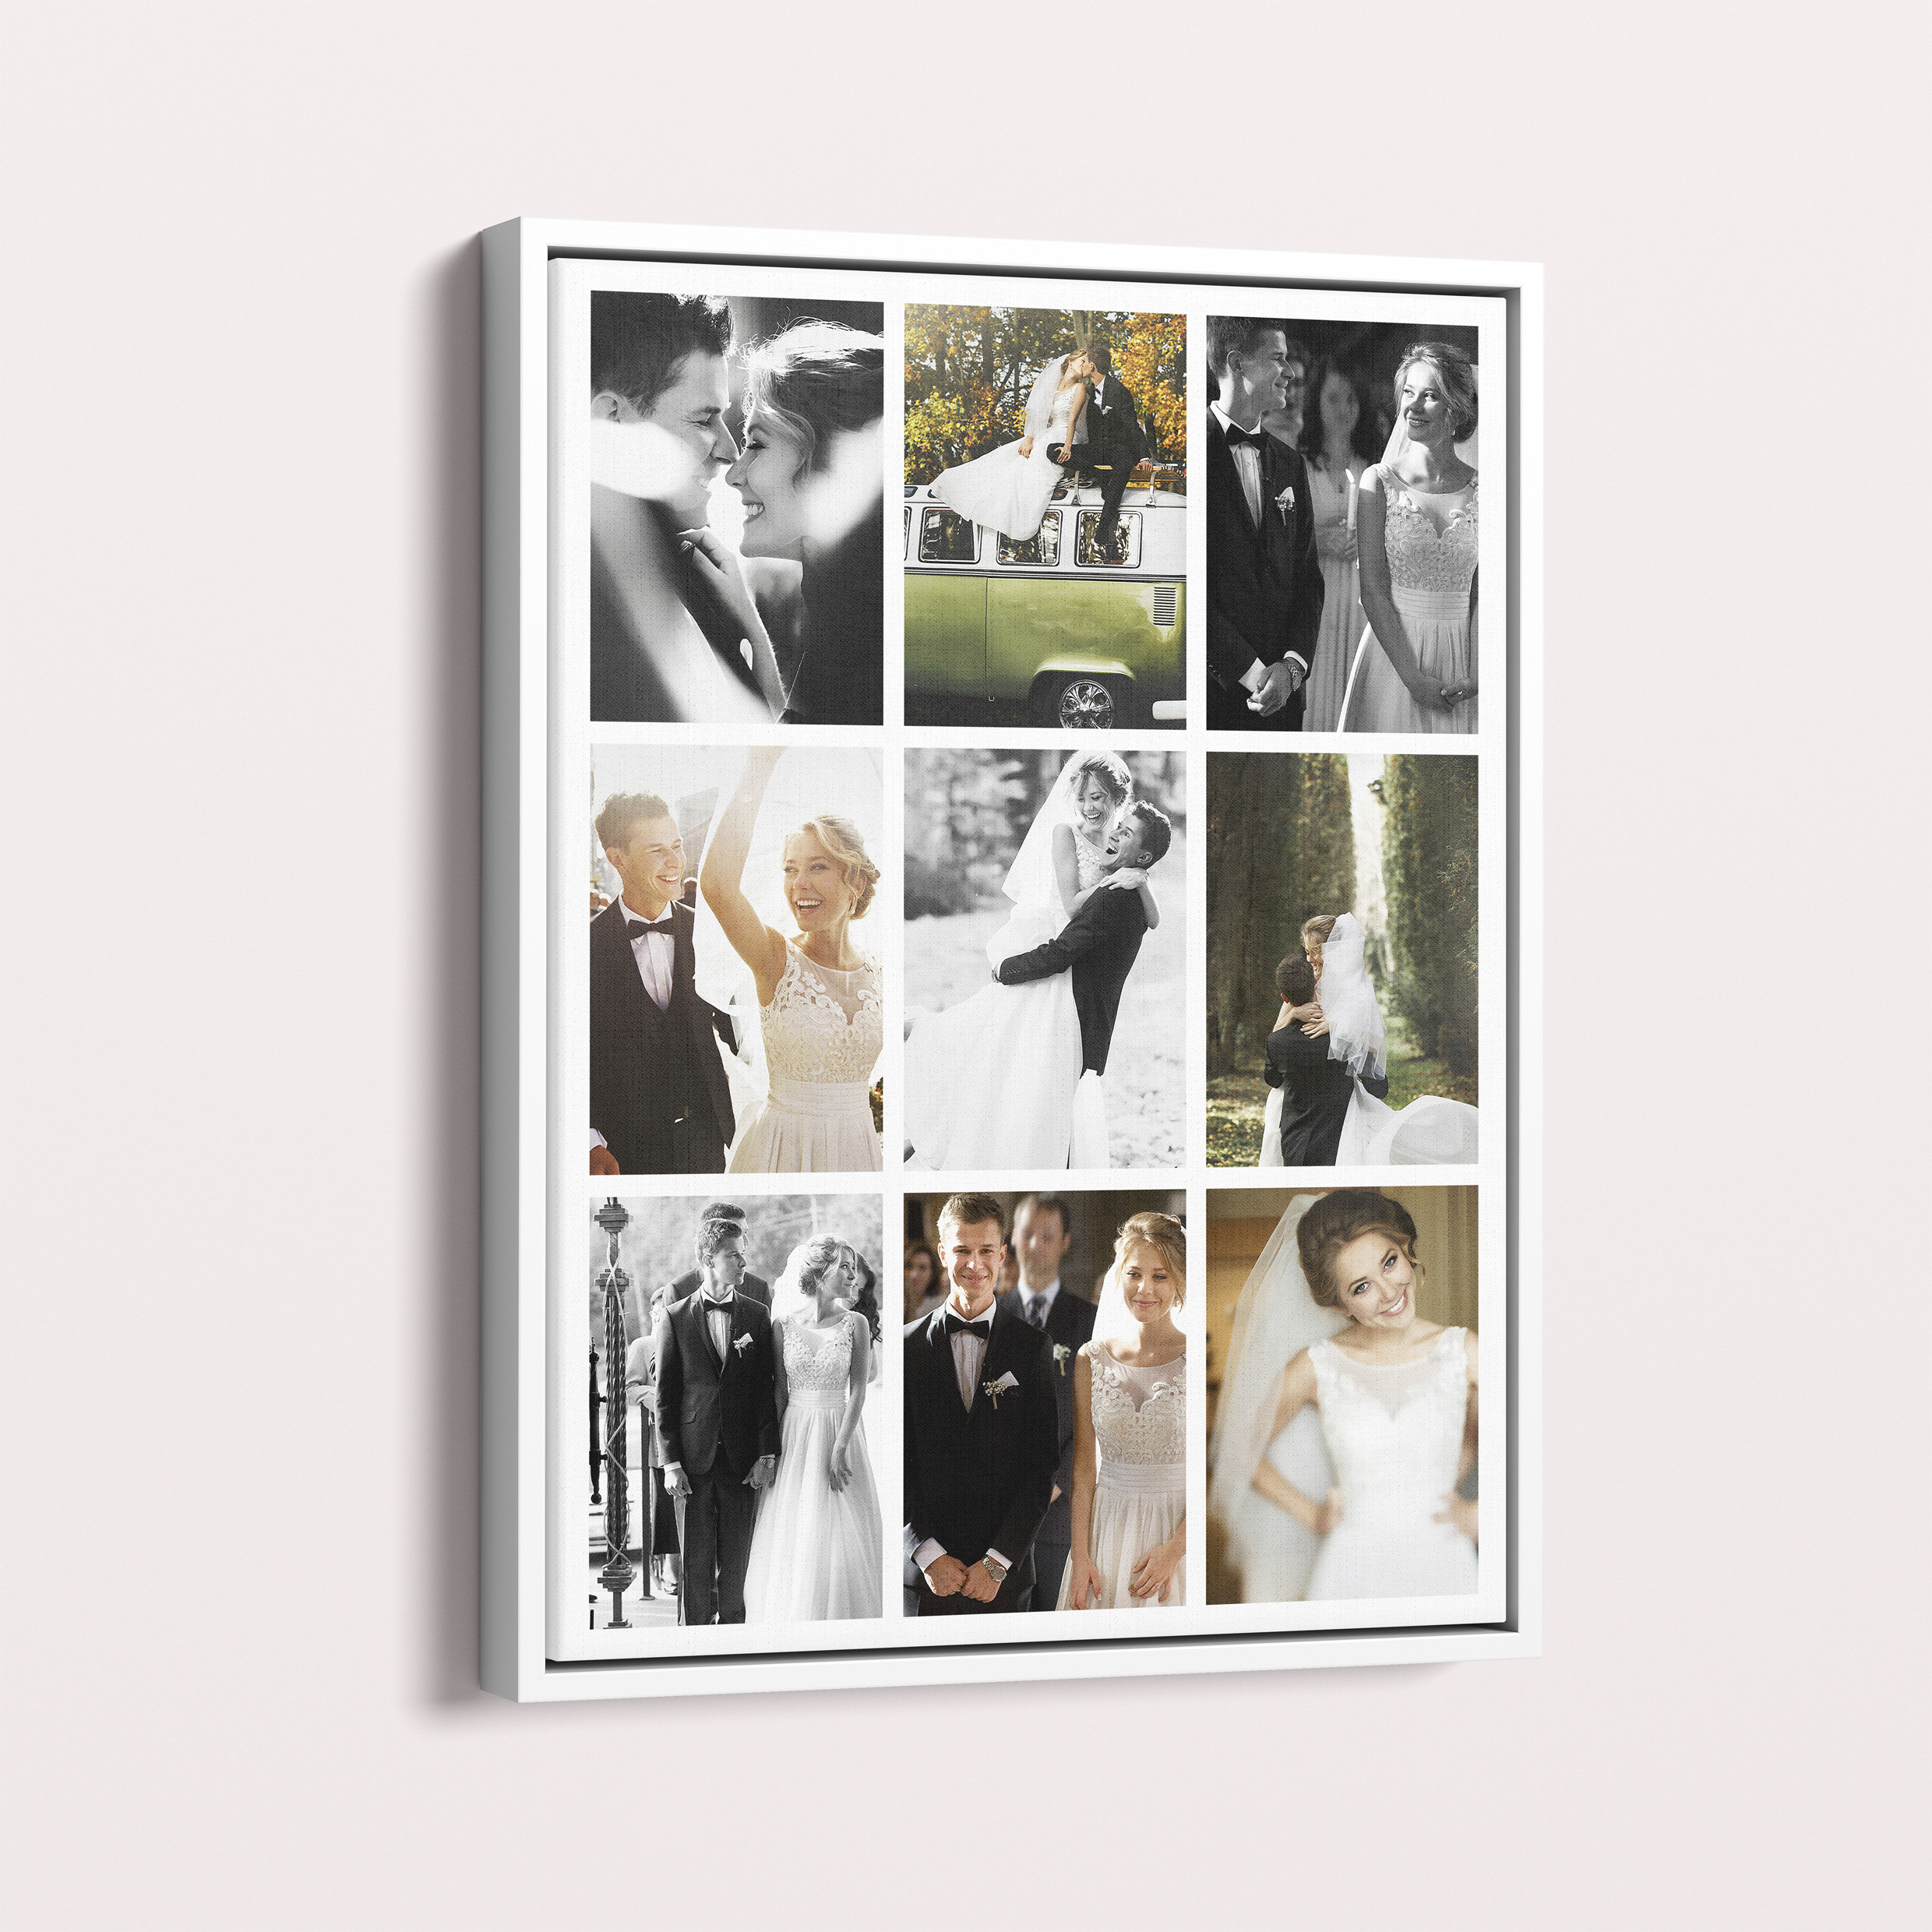 A Love Story Framed Photo Canvas – Elegant 9-Photo Display